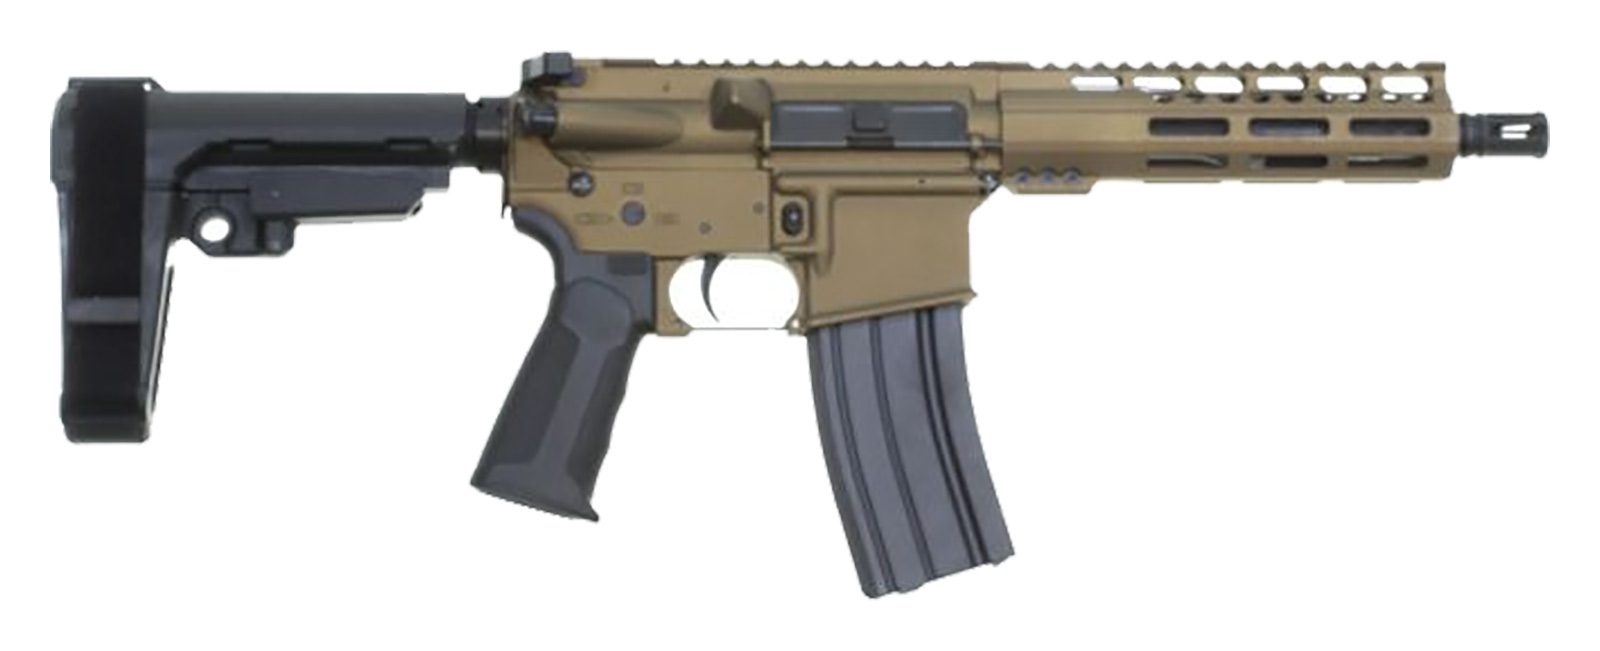 cbc-ps2-forged-aluminum-ar-pistol-burnt-bronze-5-56-nato-7-5-barrel-7-m-lok-rail-sb3-brace